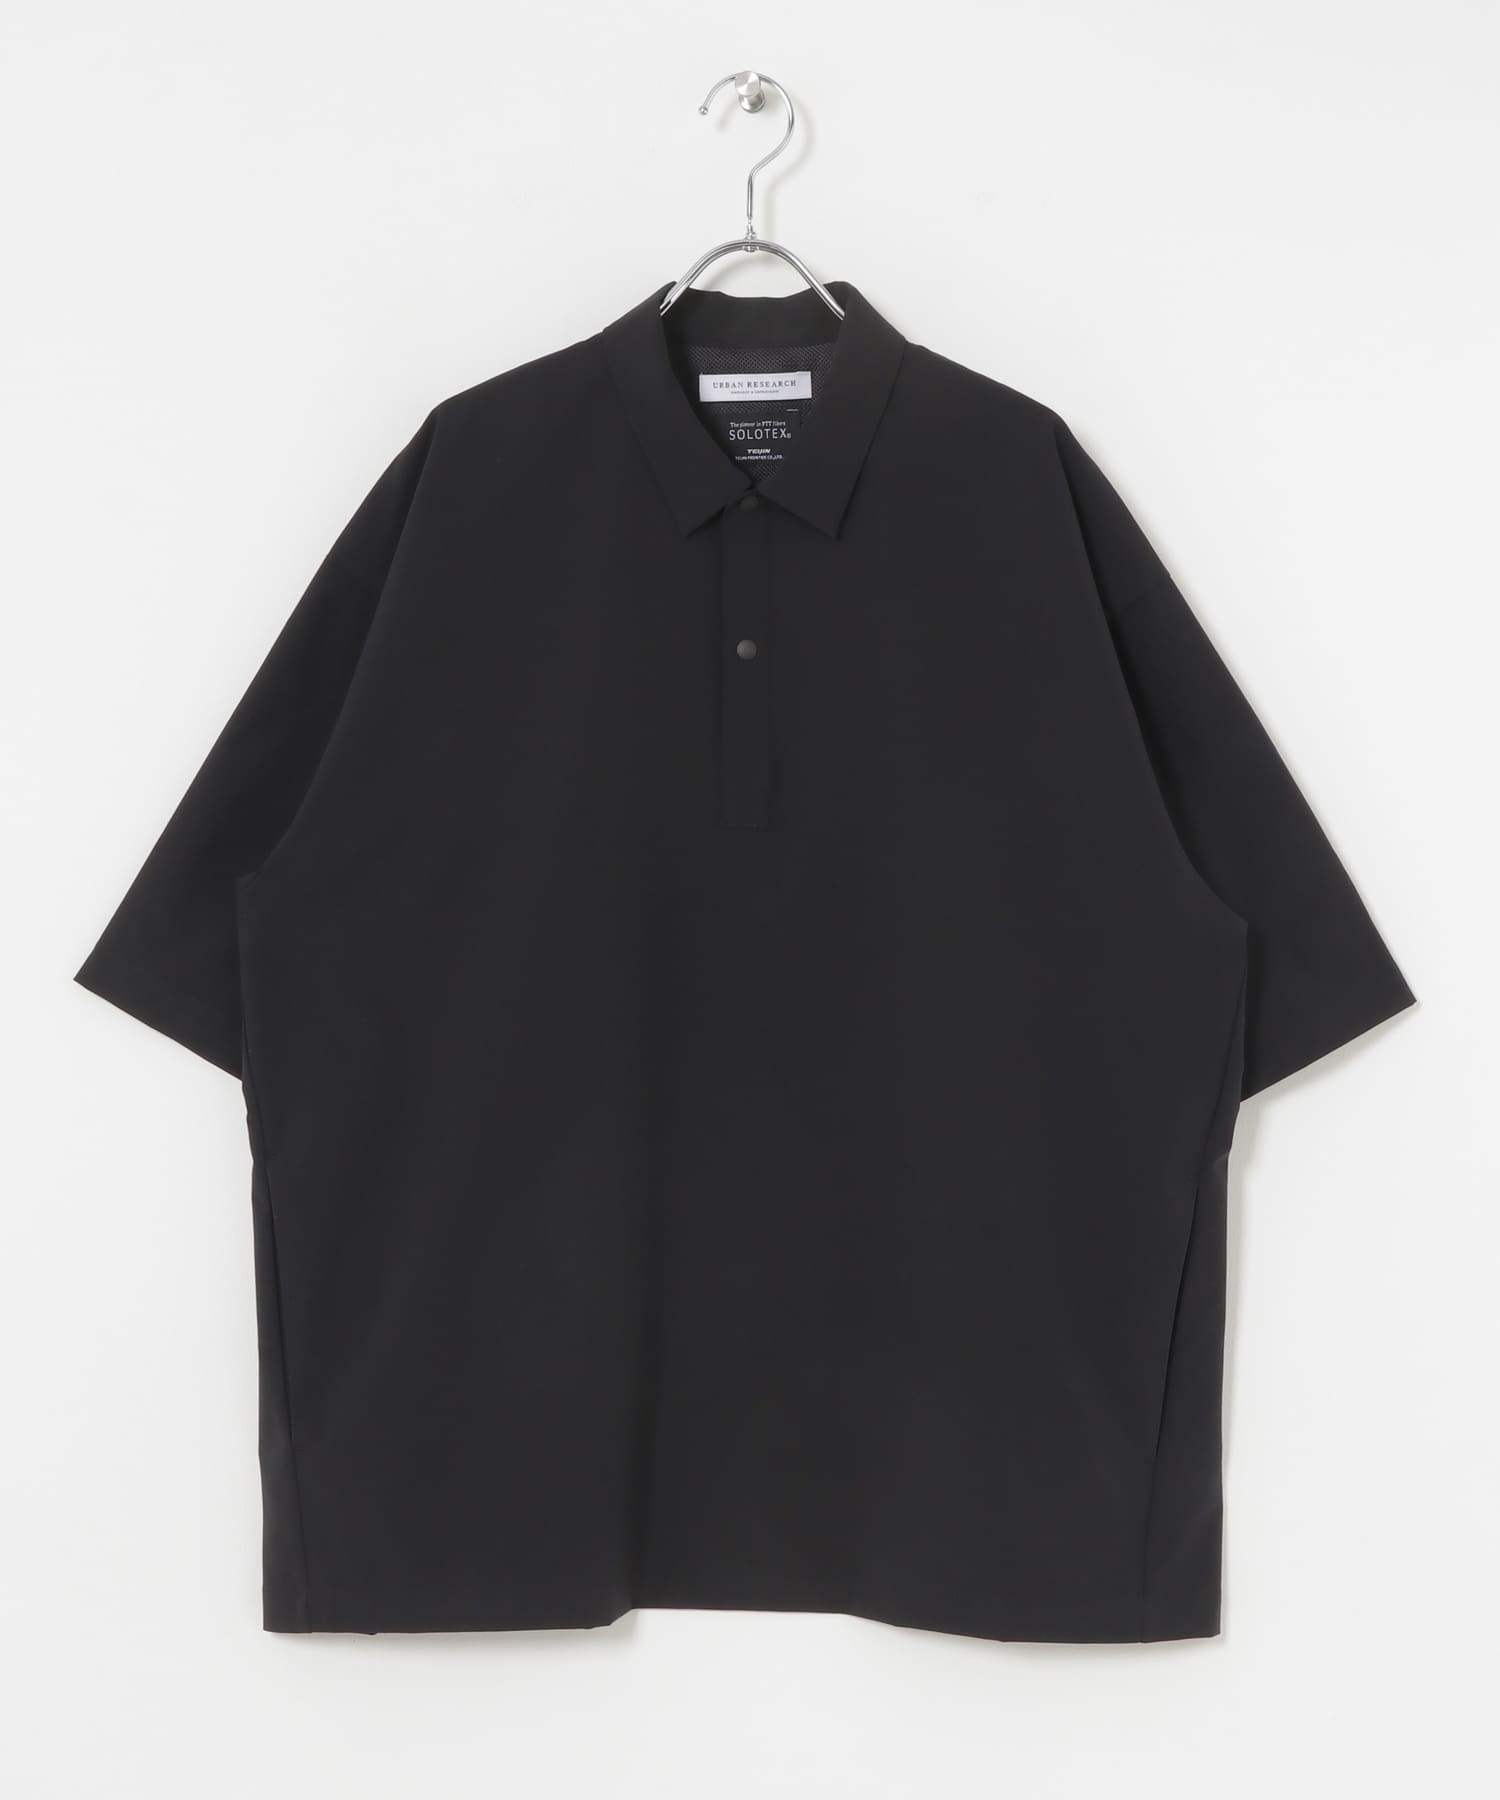 SOLOTEX 高機能短袖POLO衫(黑色-M-BLACK)